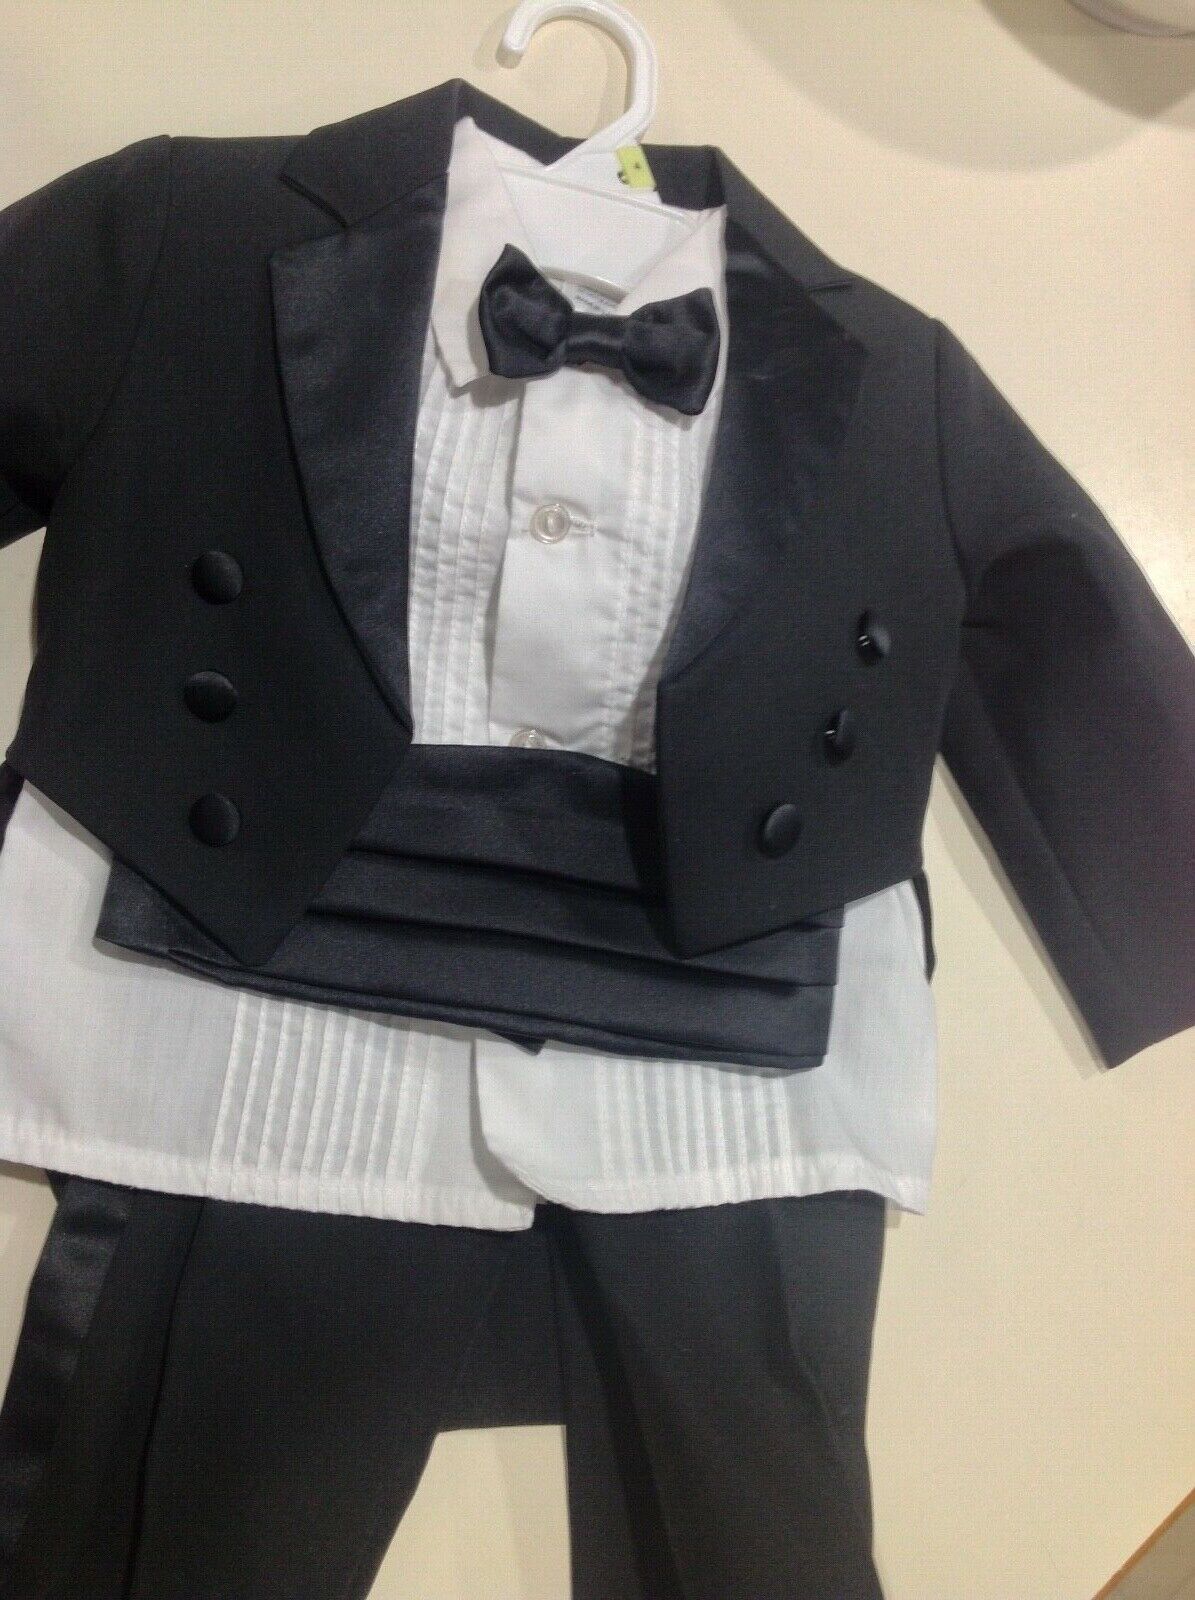 Black Tuxedo Suit w/ Tie and Cummerbund 5 Pc. Set Boy's Size 2T-